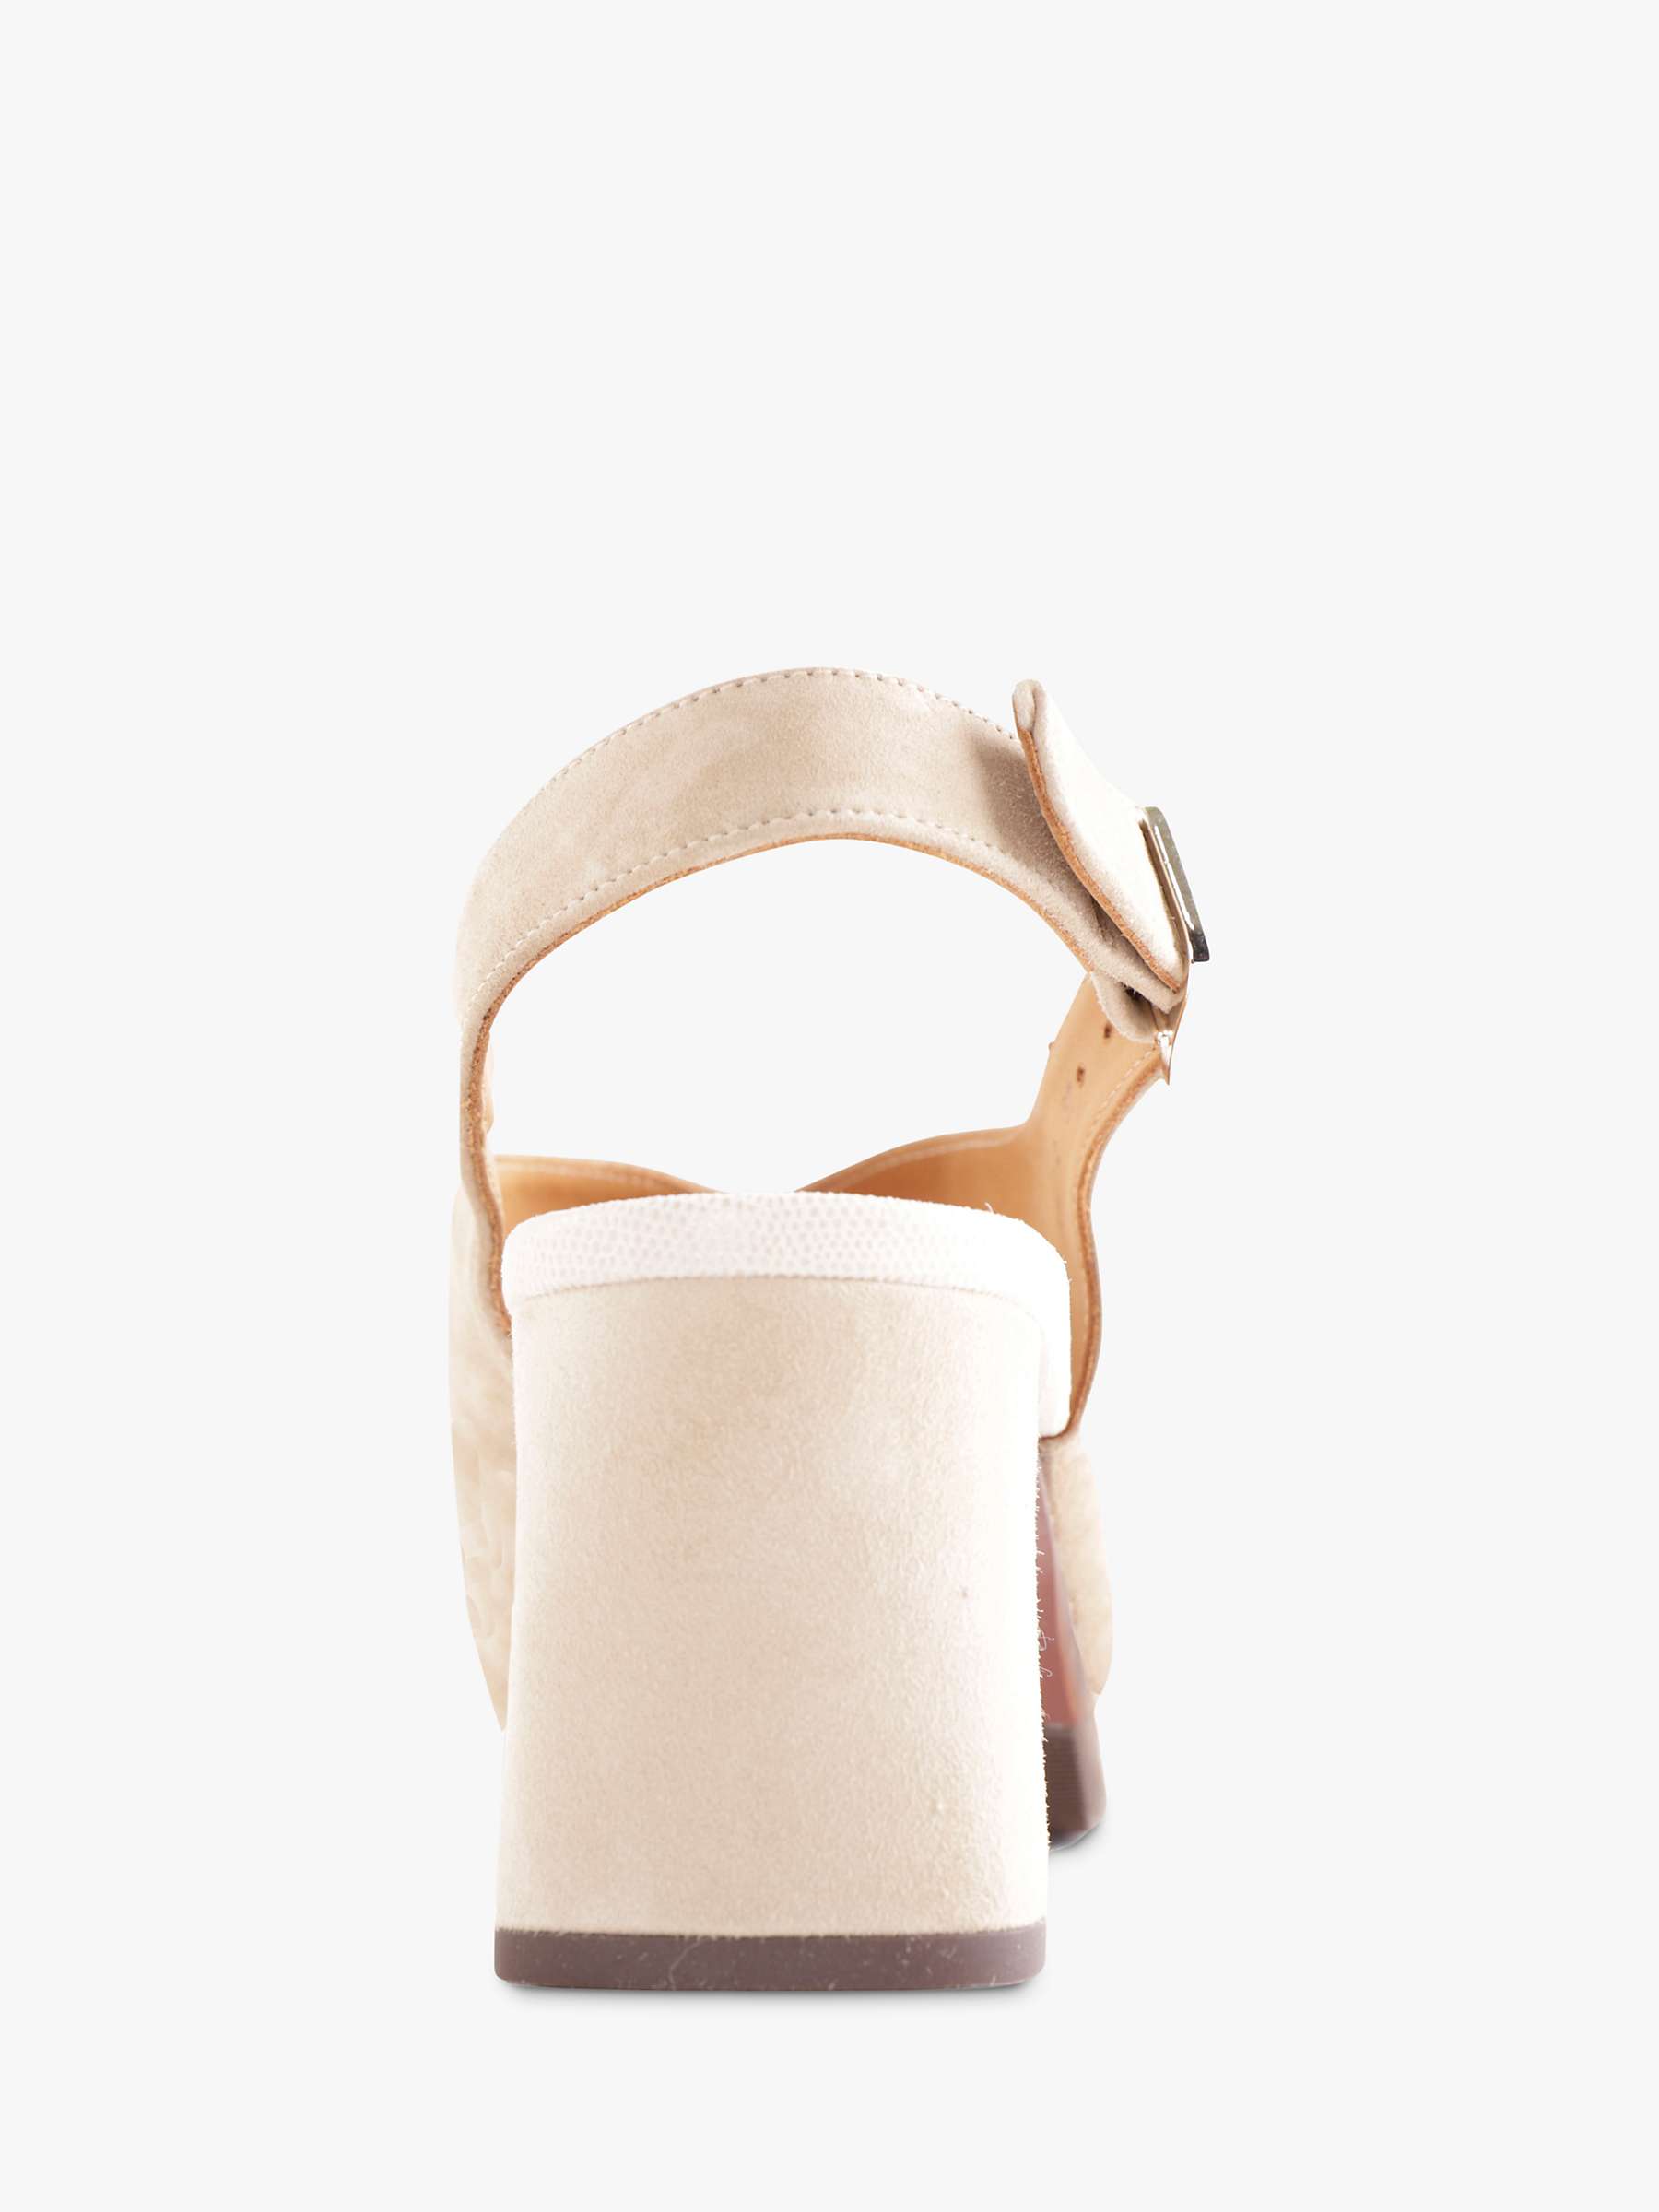 Buy Chie Mihara Gesto Leather Sandals, Antetoast/Jeeplake Online at johnlewis.com